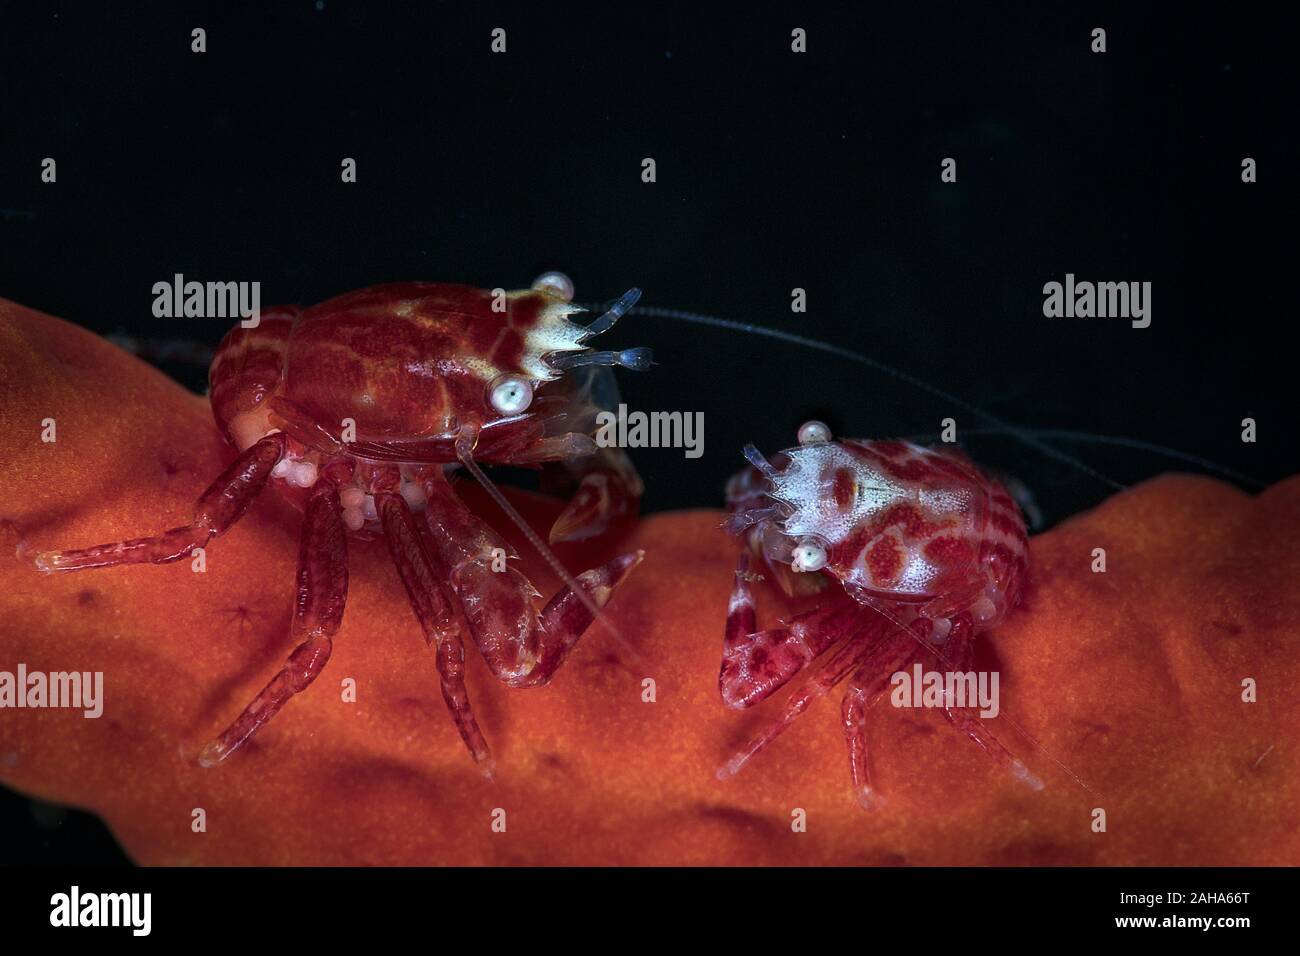 Pair of Four-lobed Porcelain Crabs (Lissoporcellana quadrilobata). Underwater macro photography from Anilao, Philippines Stock Photo